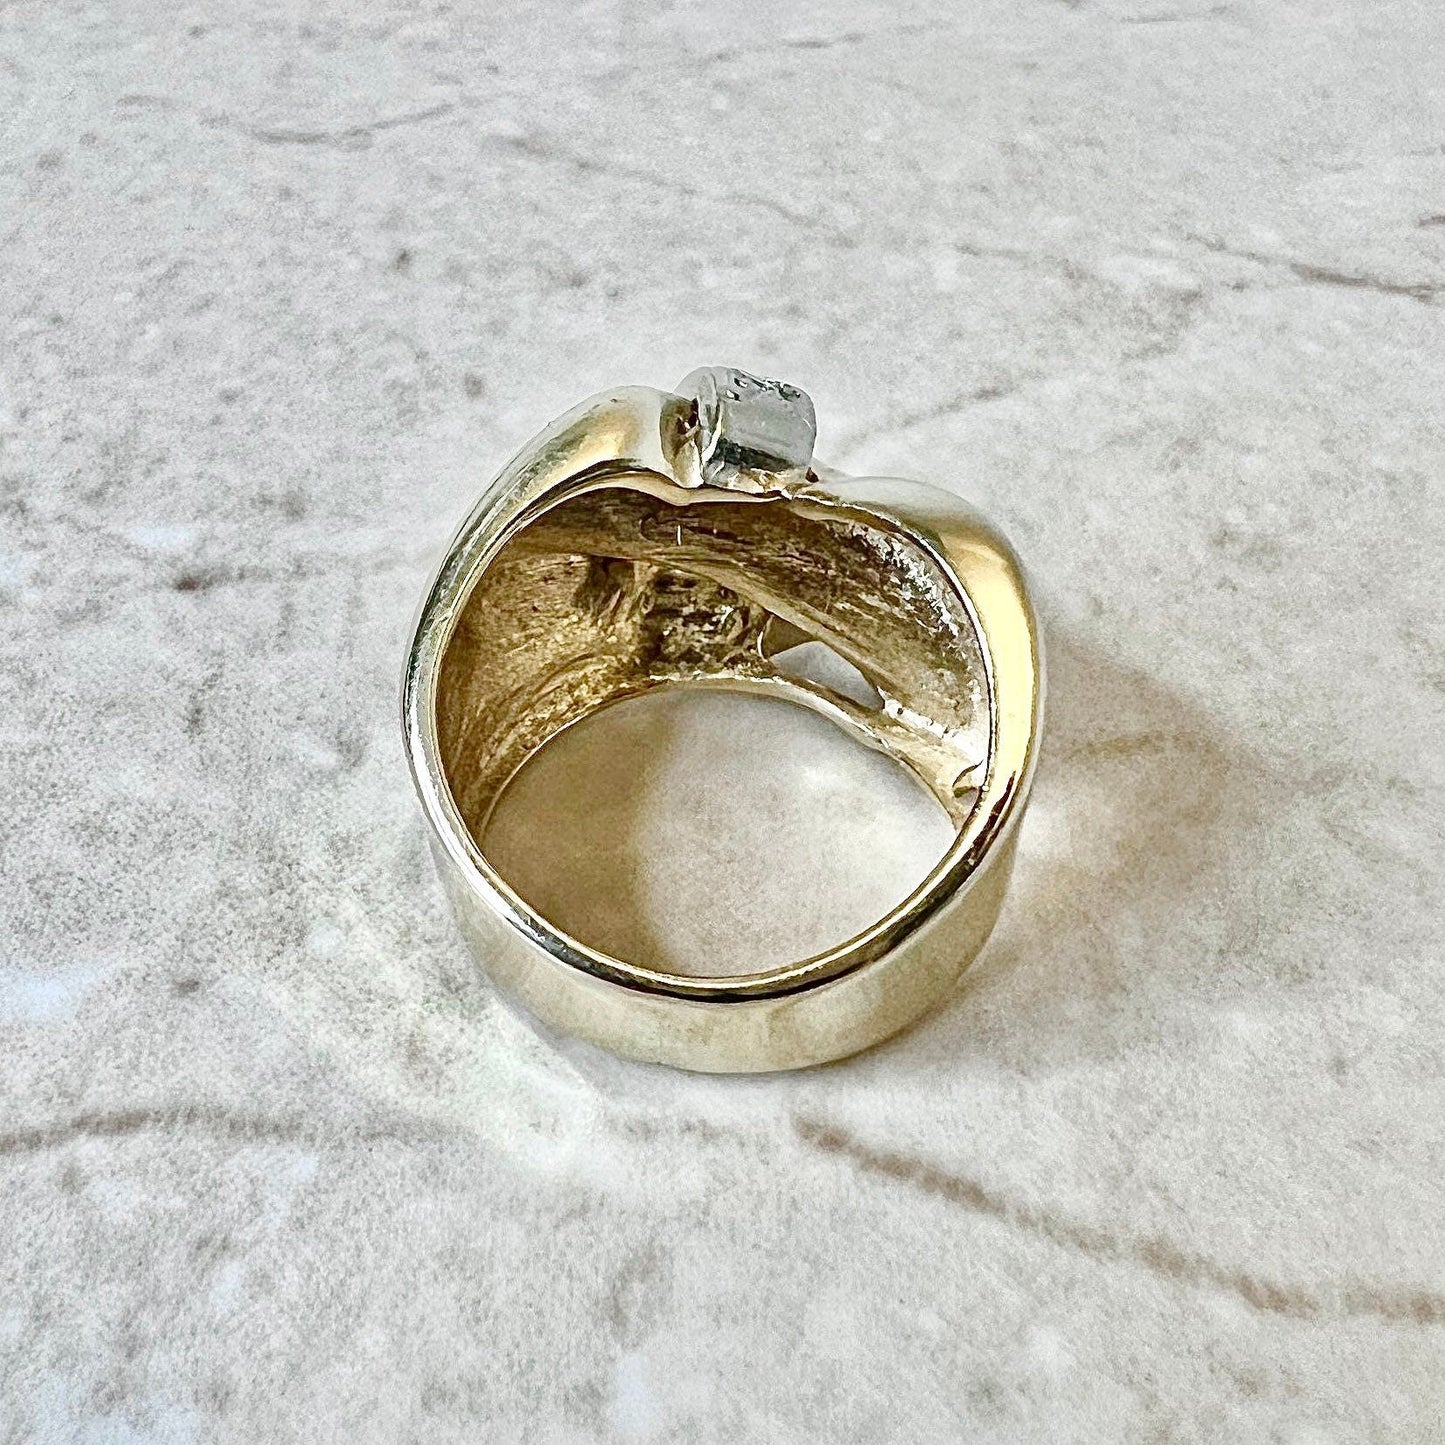 Fine Vintage 14K Retro Diamond Ring - Two Tone Gold - Diamond Cocktail Ring - Birthday Gift - Holiday Gift - Yellow & White Gold - Size 5.5